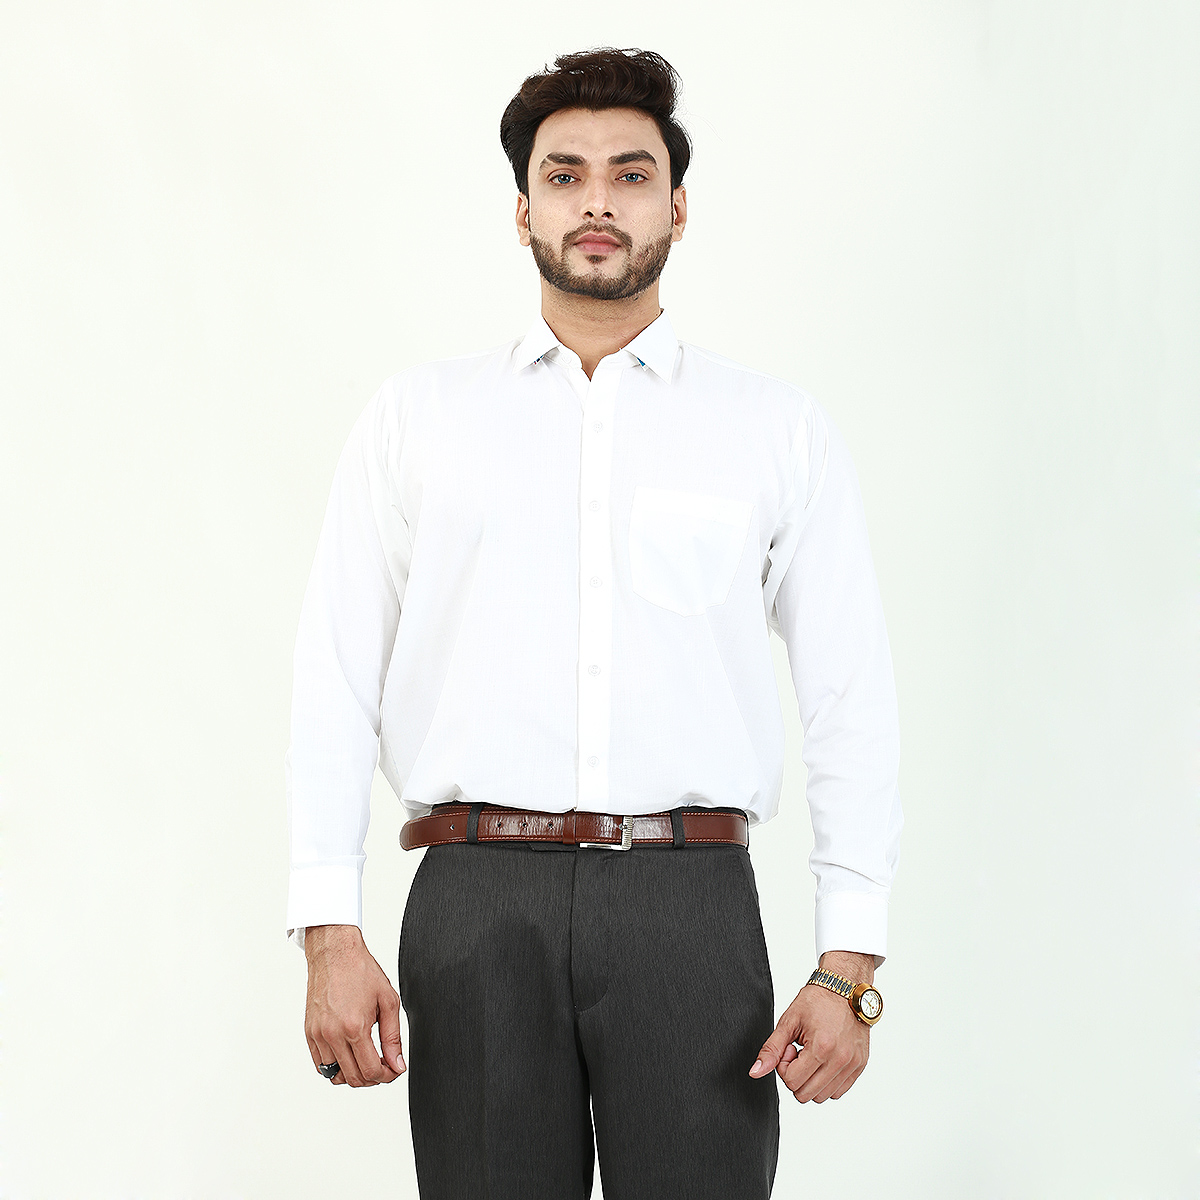 Cut Price White Formal Dress Shirt For Men Price in Pakistan - View ...